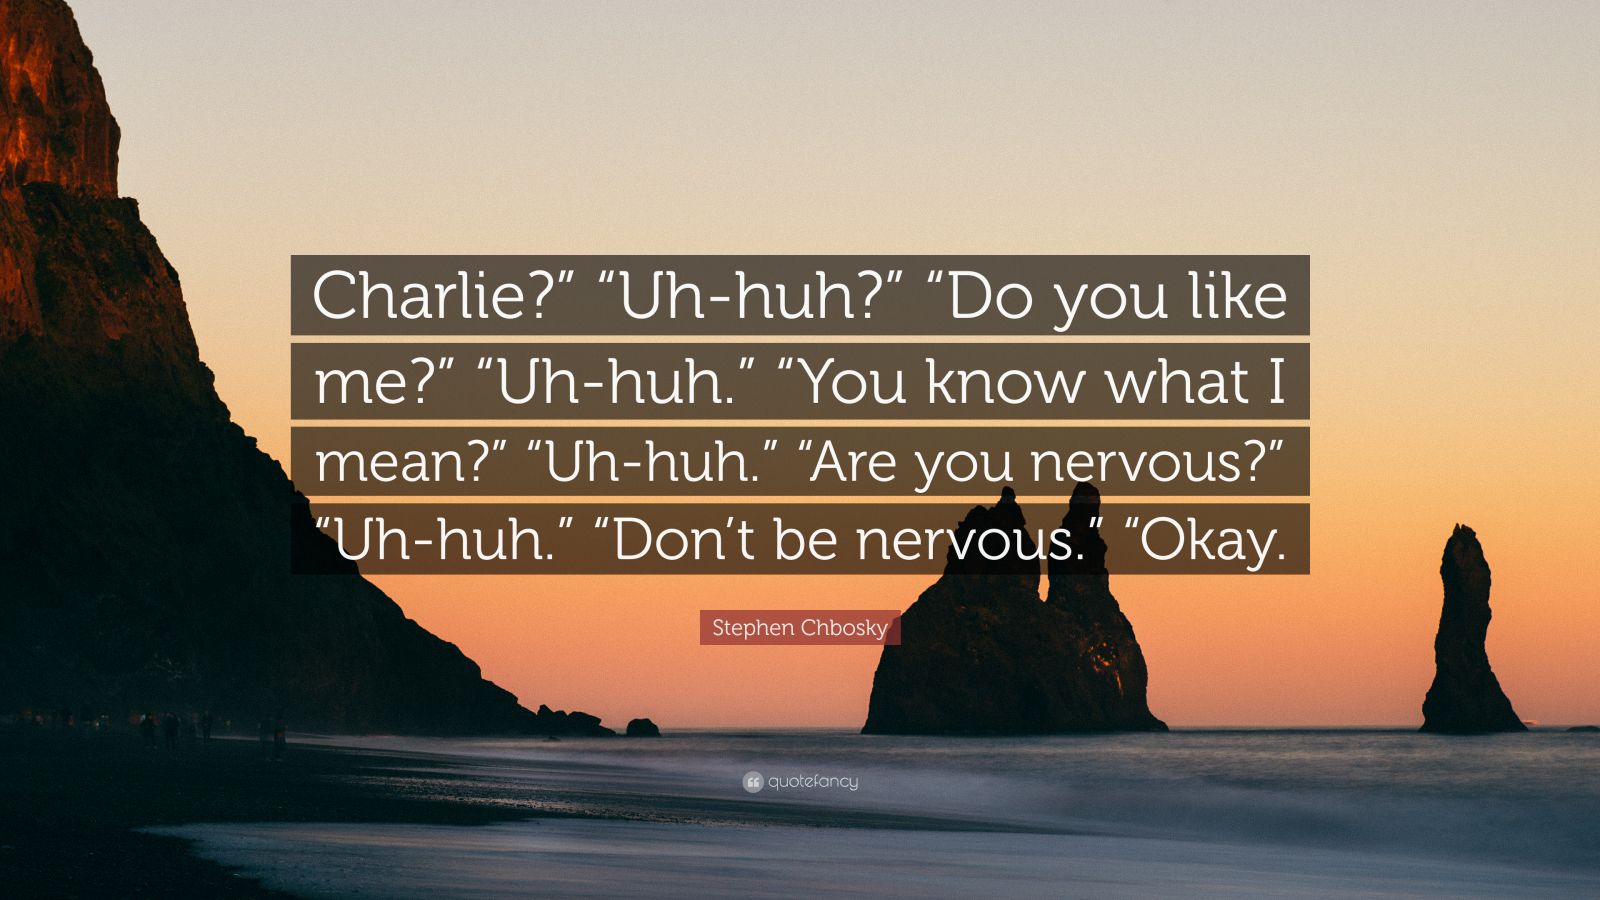 Stephen Chbosky Quote “charlie” “uh Huh” “do You Like Me” “uh Huh